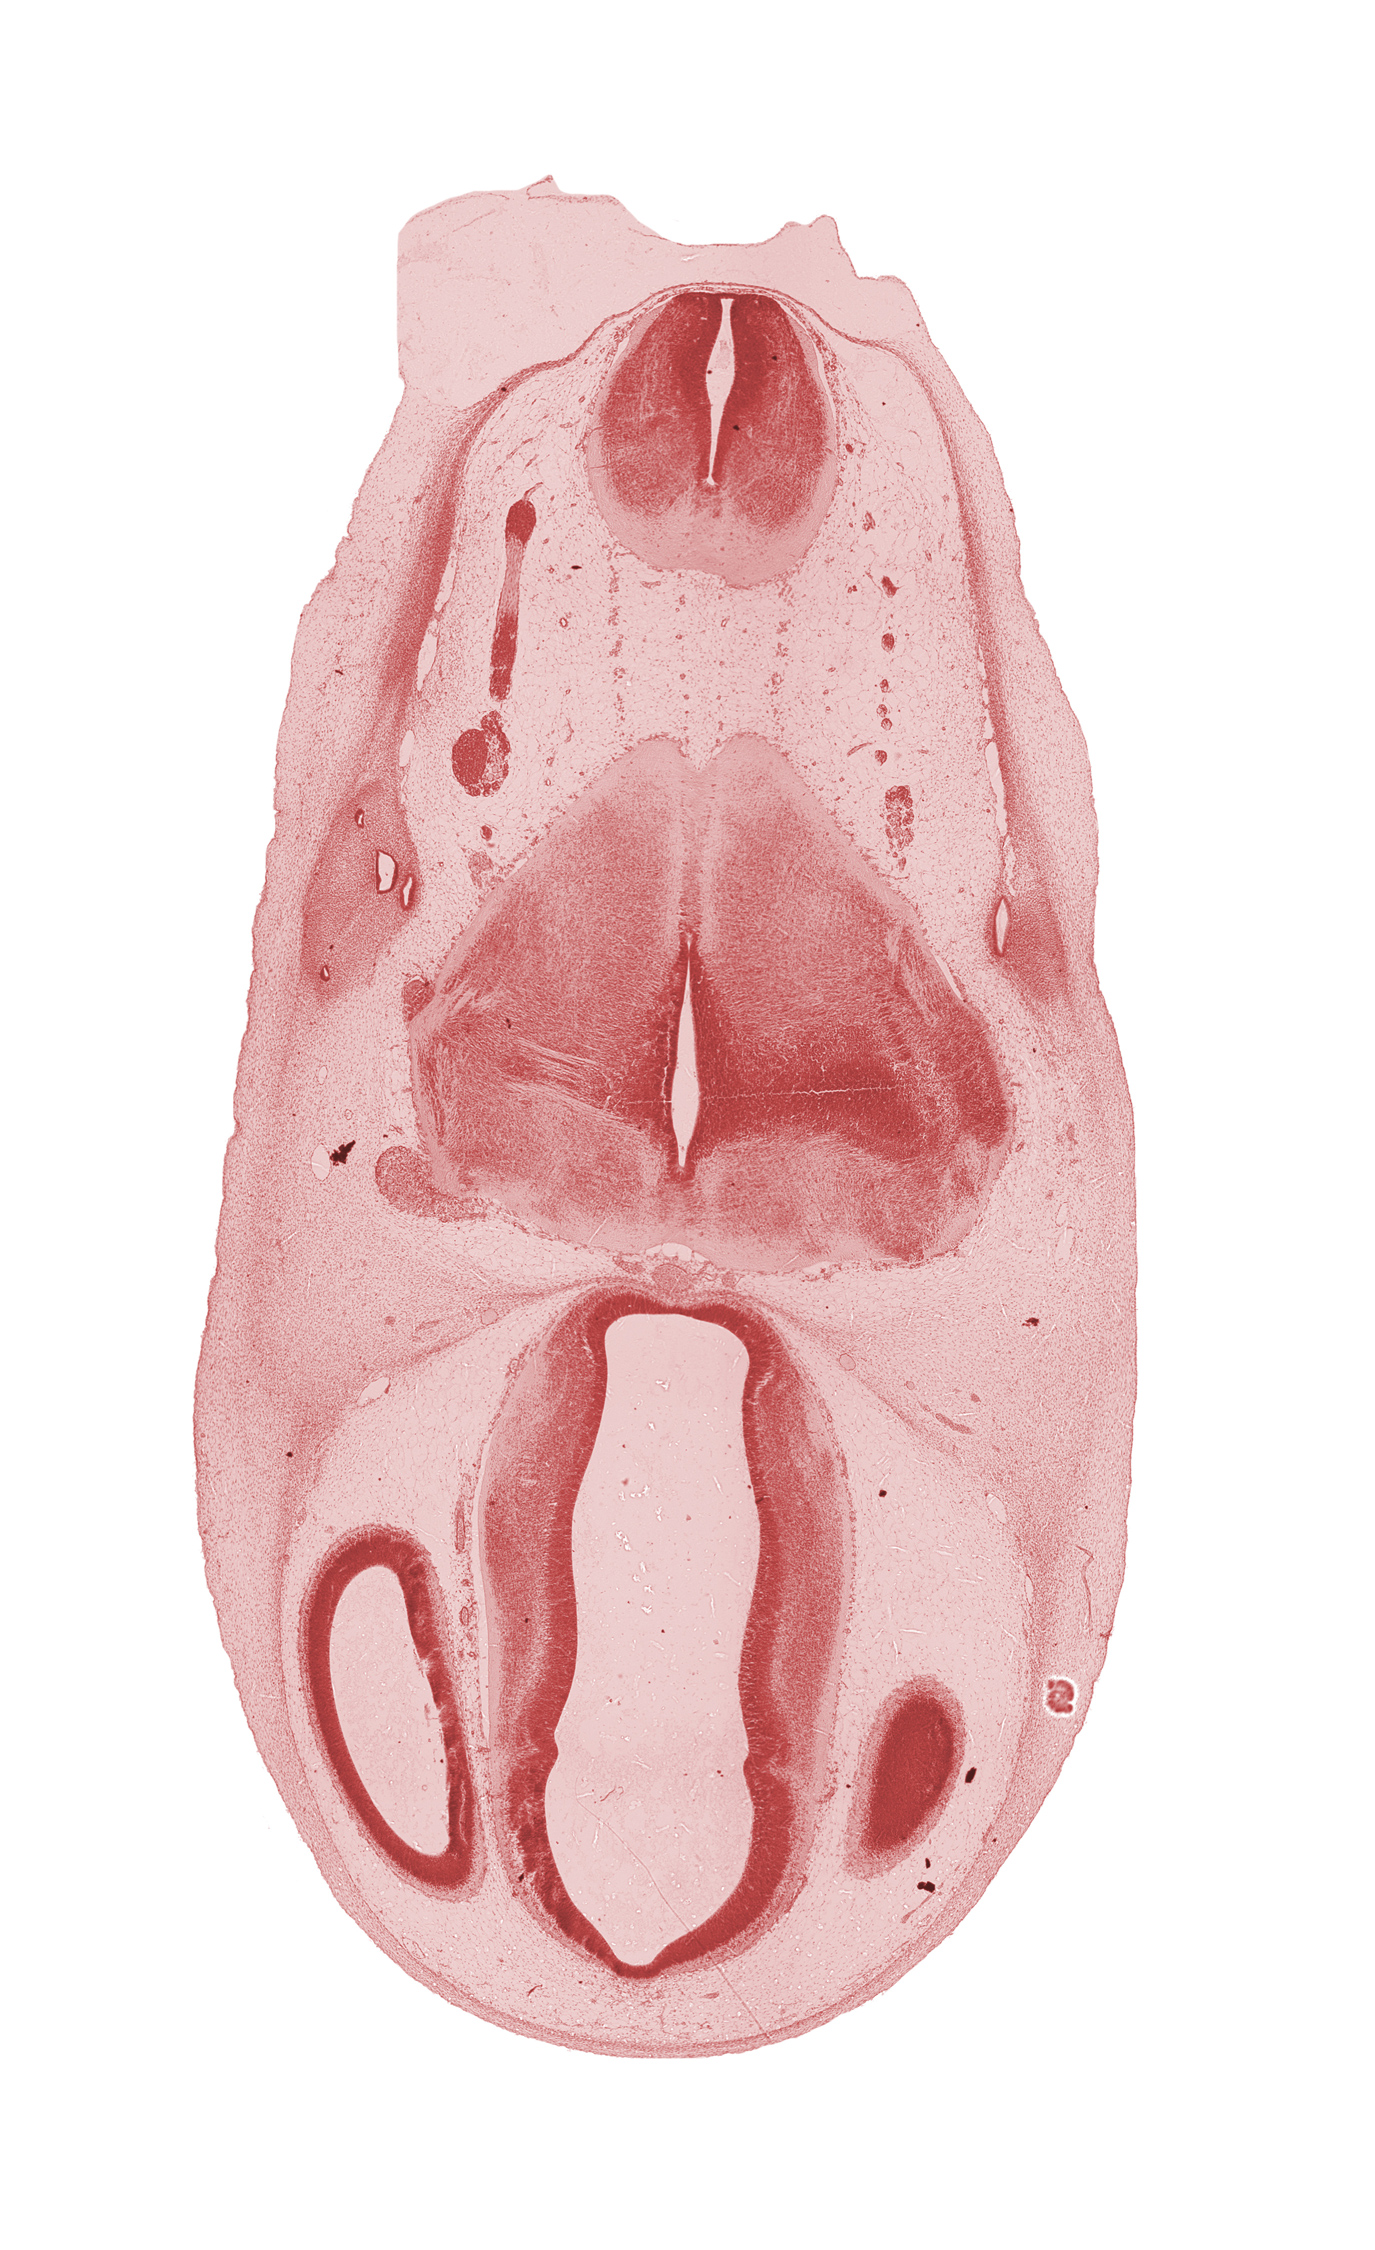 basilar artery, dorsal thalamus, edge of cerebral vesicle(s), endolymphatic sac, epithalamus, hypothalamus, lateral ventricle, osteogenic layer, pyramidal tract region, rhombencoel (fourth ventricle), root of accessory nerve (CN XI), subarachnoid space, third ventricle, transverse fascicle, vagus nerve (CN X), ventral thalamus